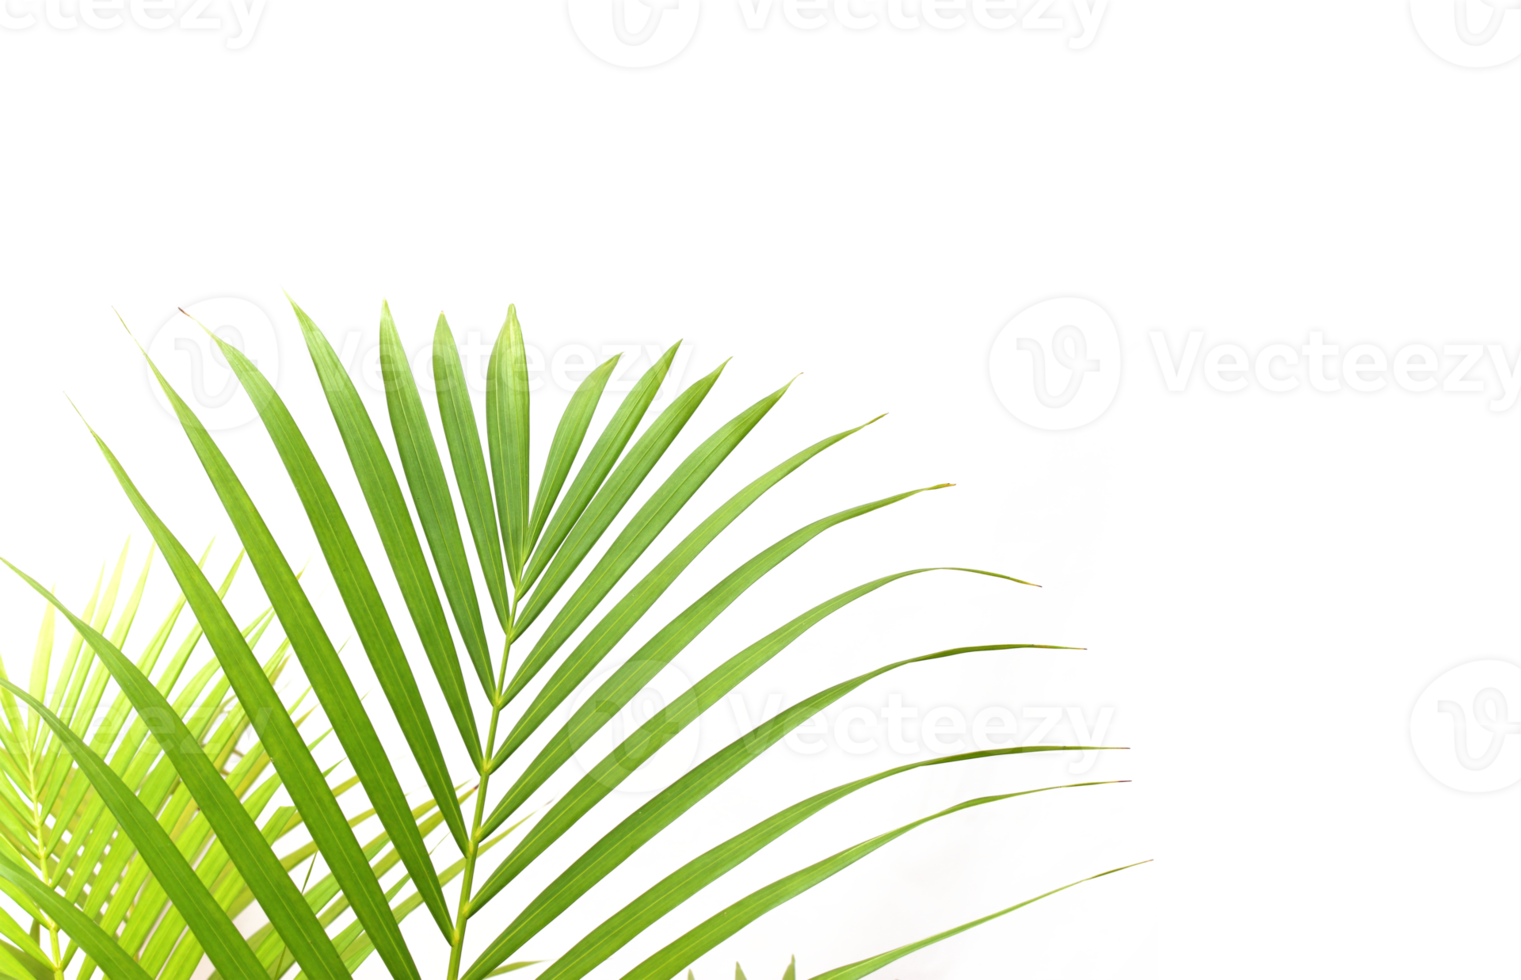 tropical green palm leaf on transparent background png file